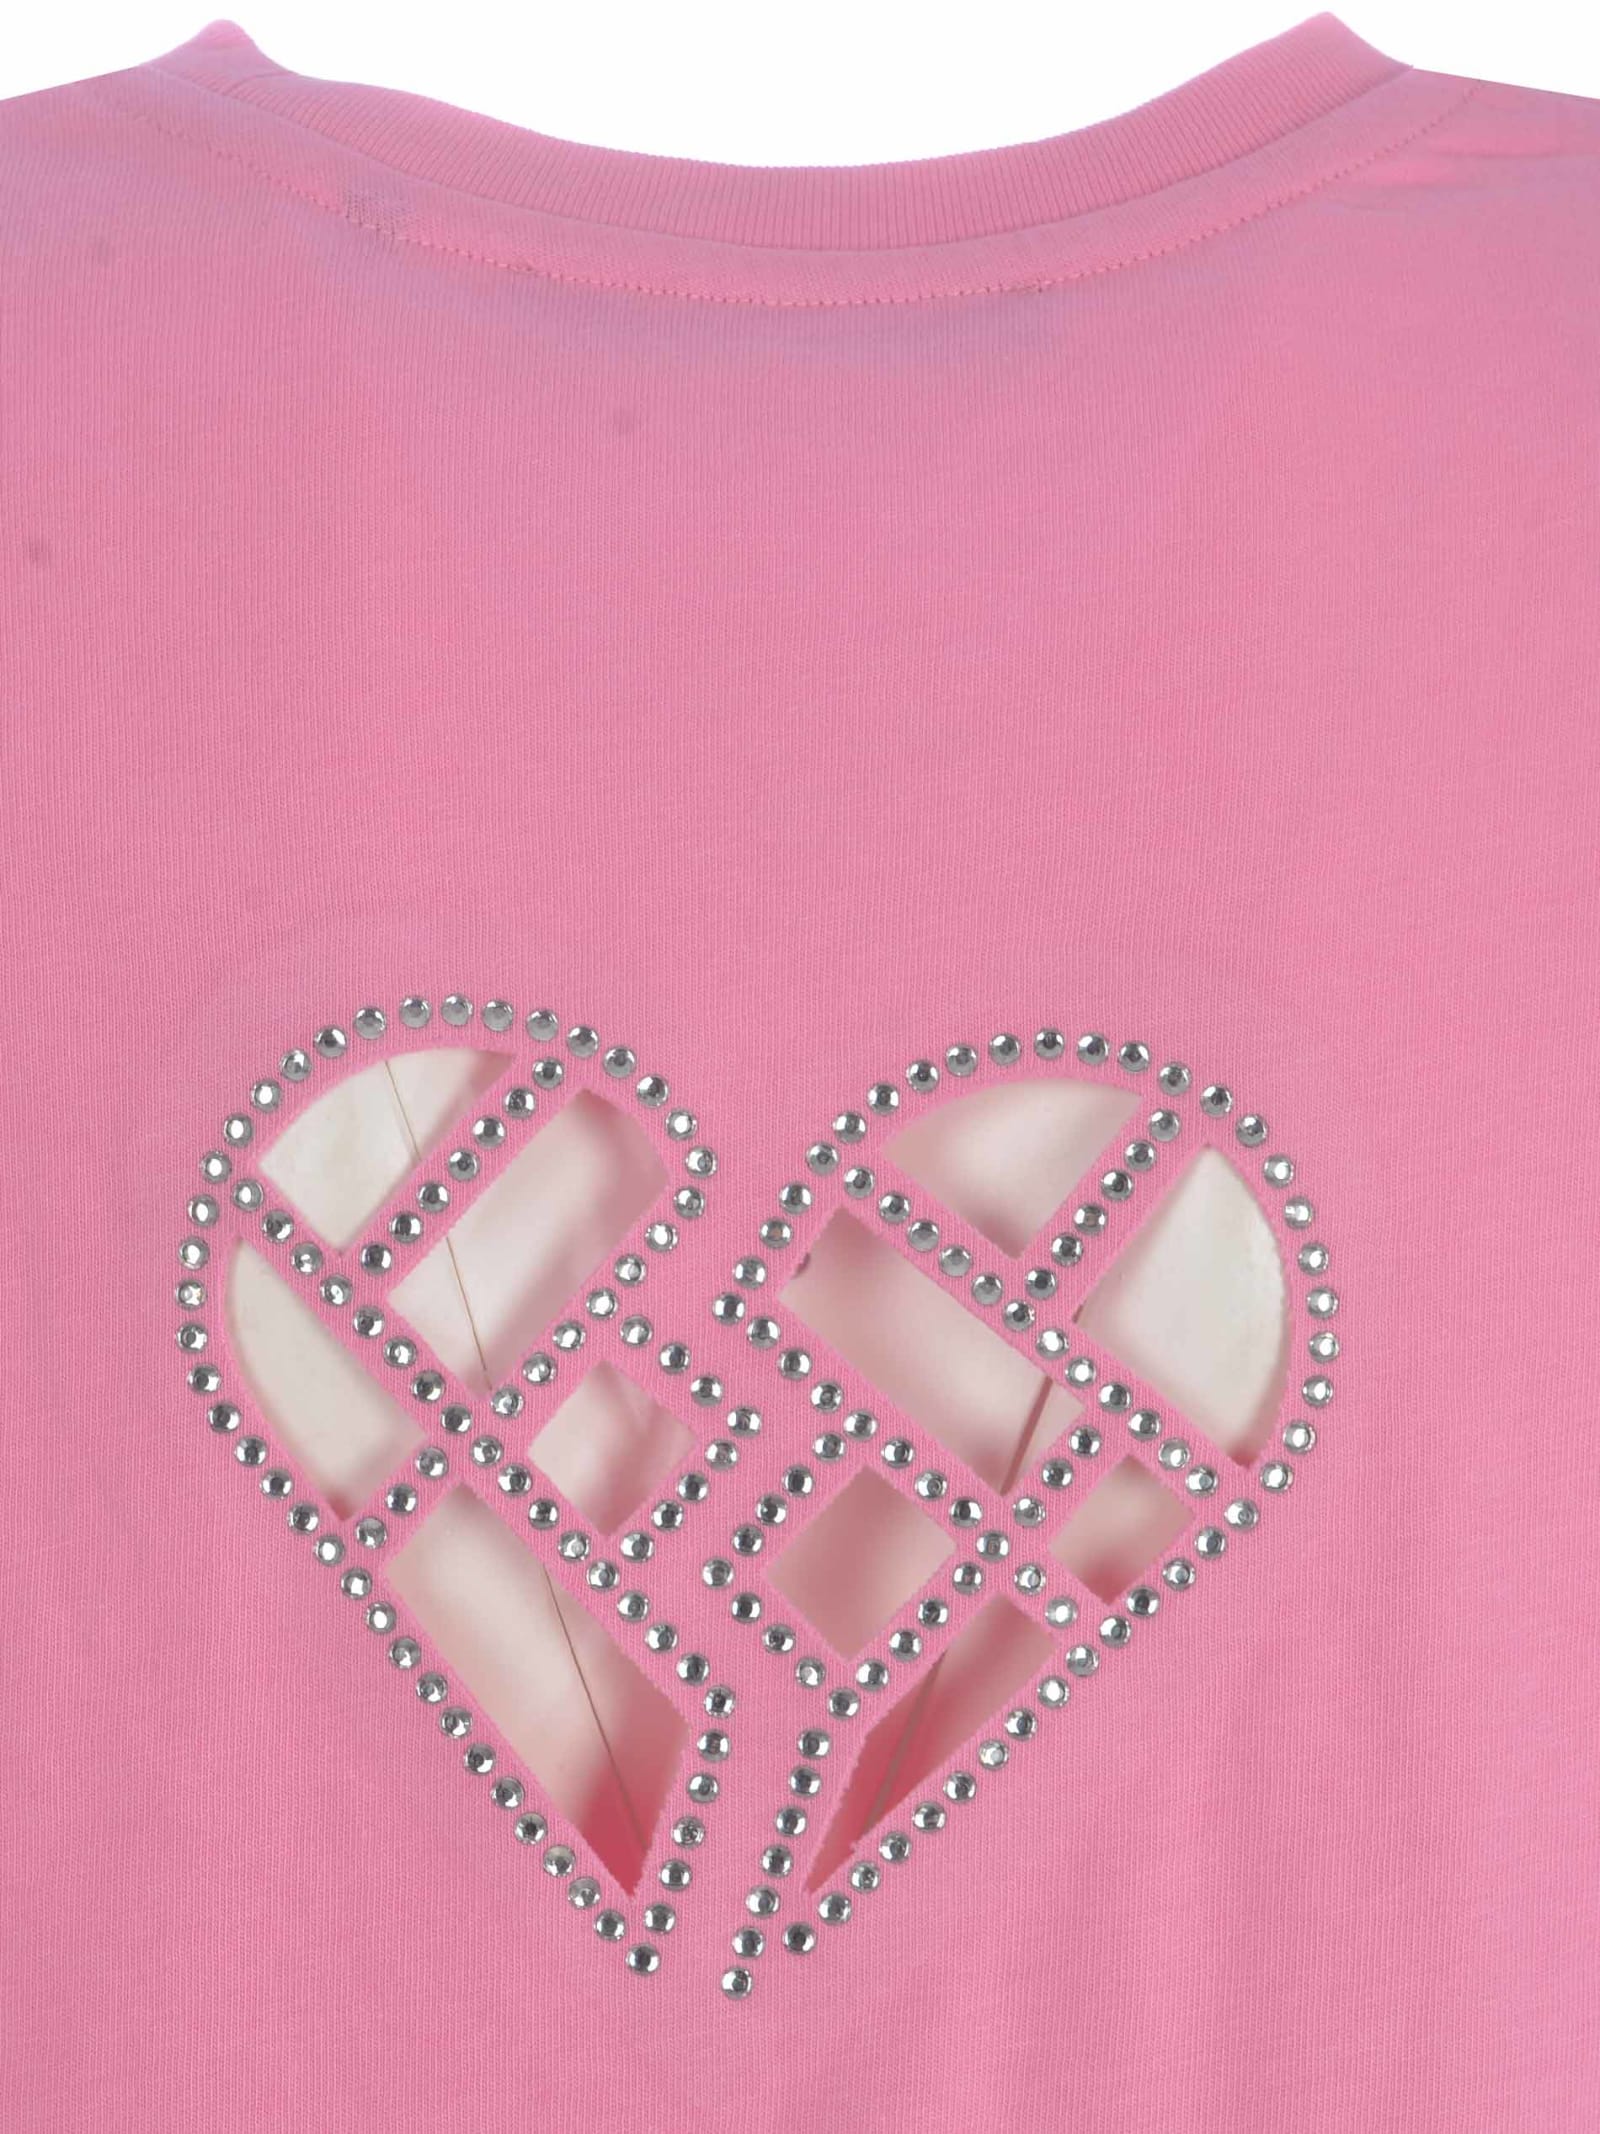 Shop Rotate Birger Christensen T-shirt Rotate Heart In Cotton In Rosa